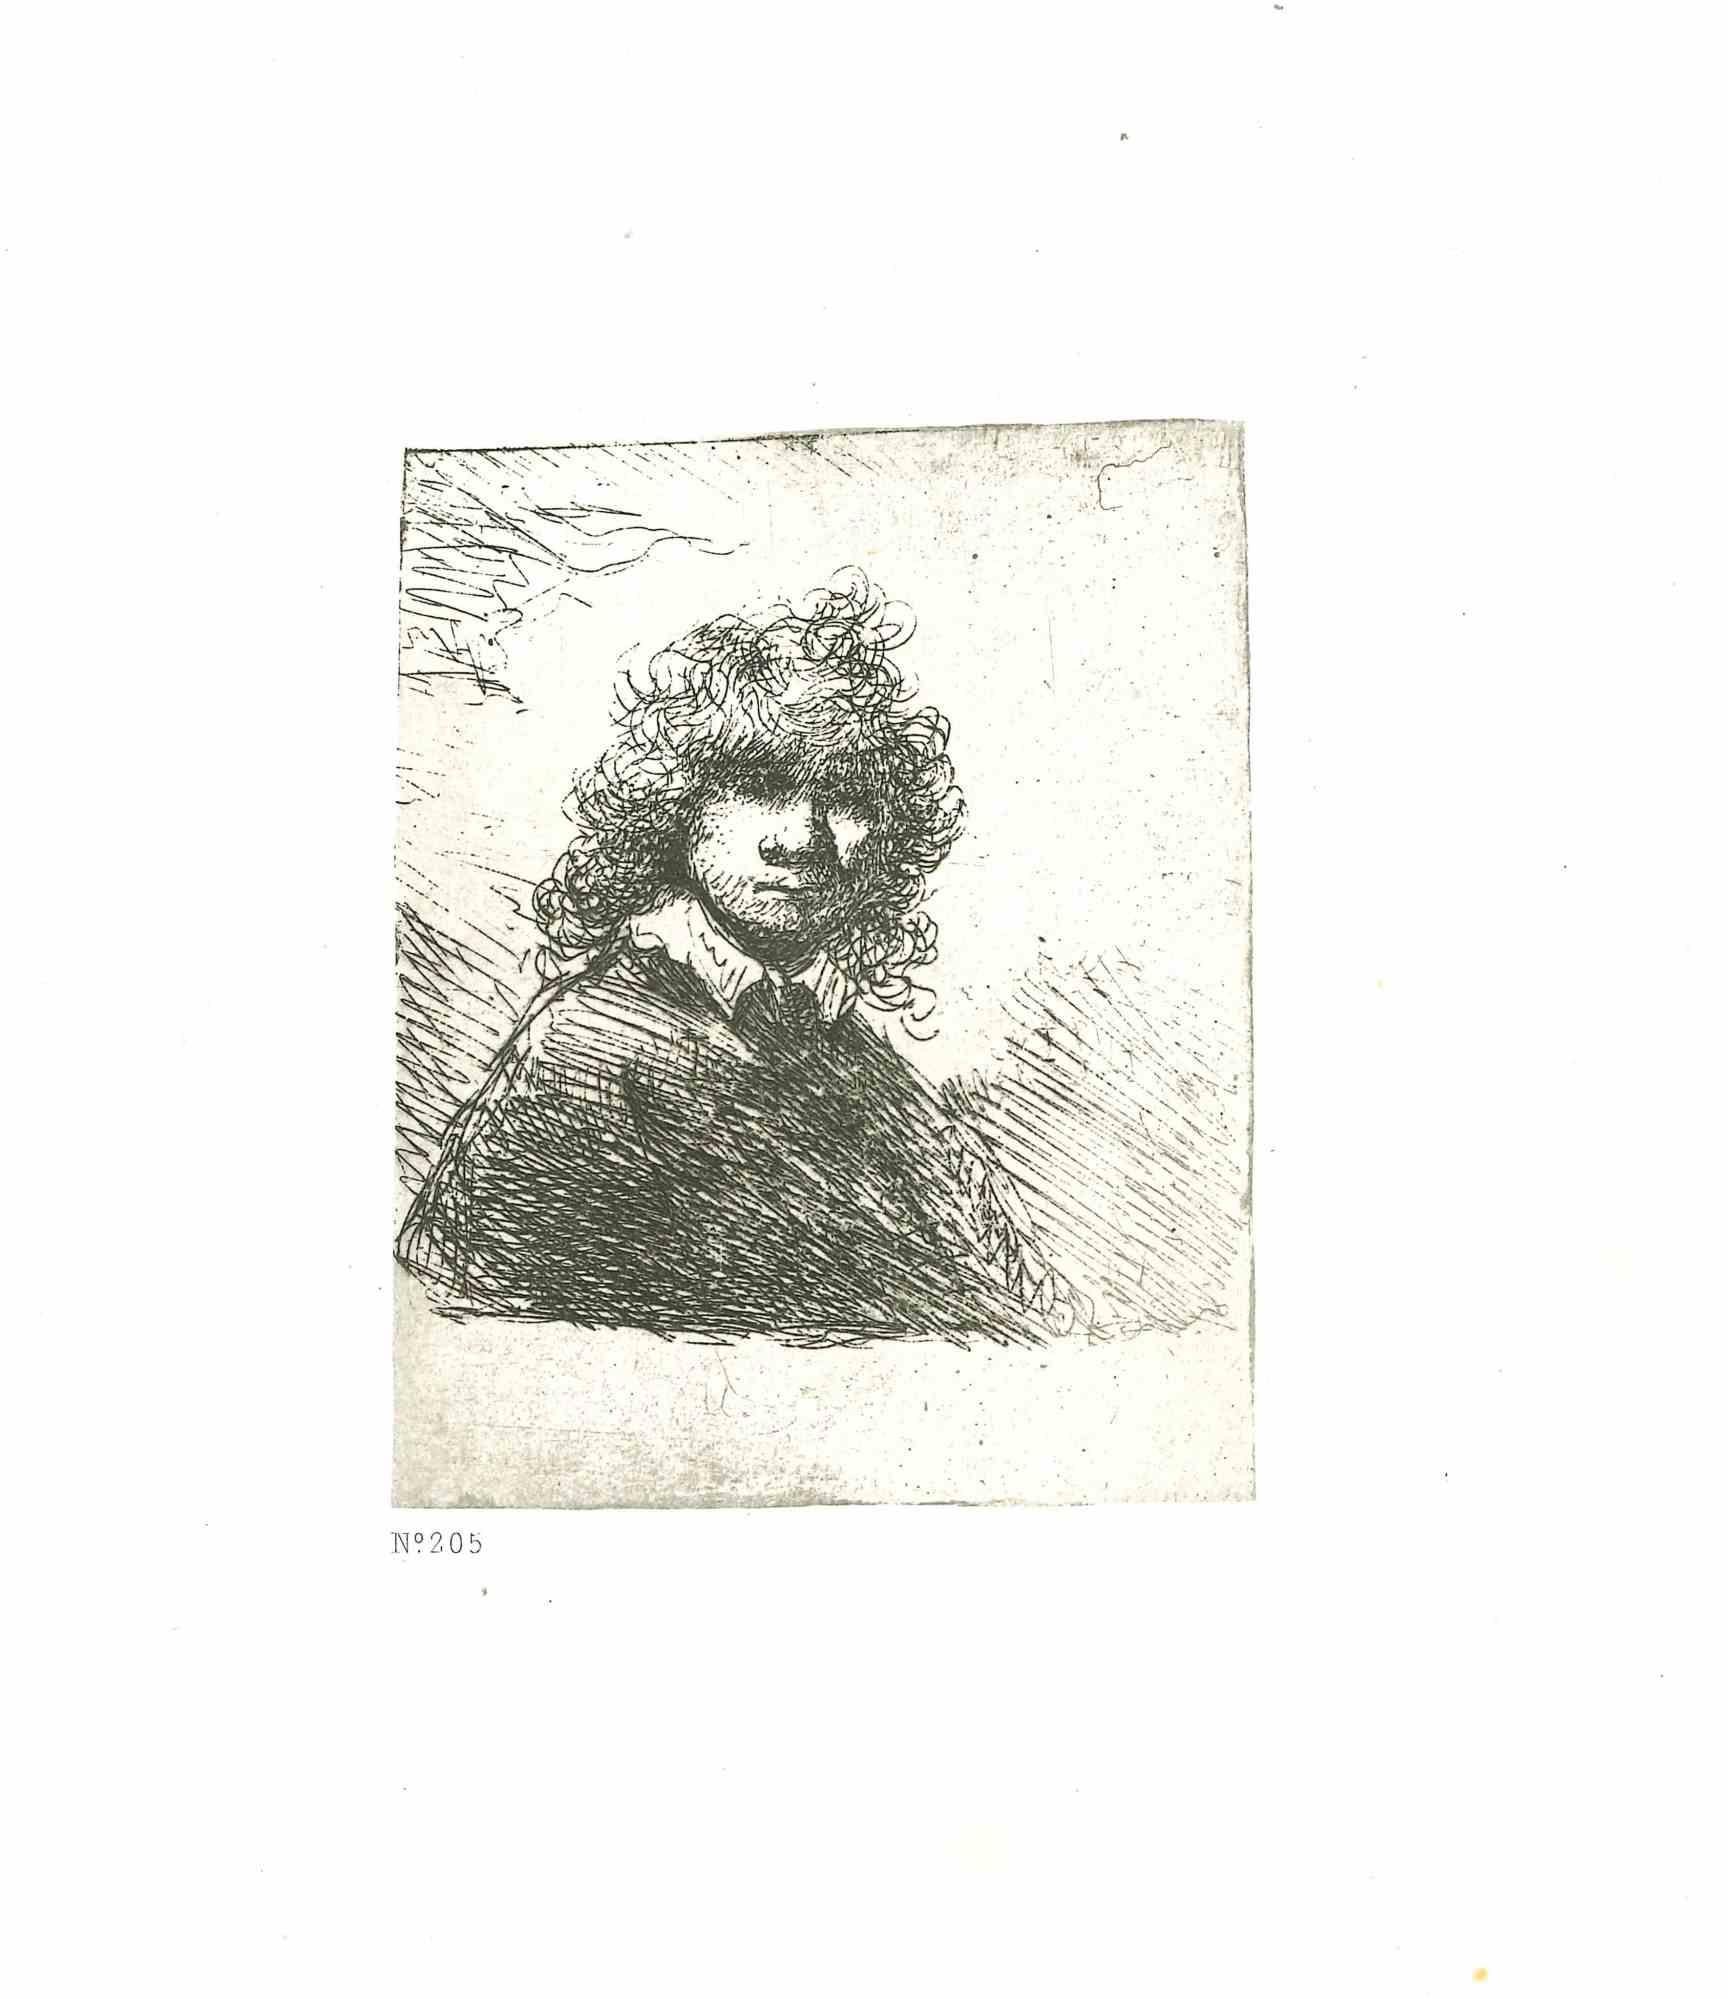 Charles Amand Durand Portrait Print - Self-Portrait - Engraving after Rembrandt - 19th Century